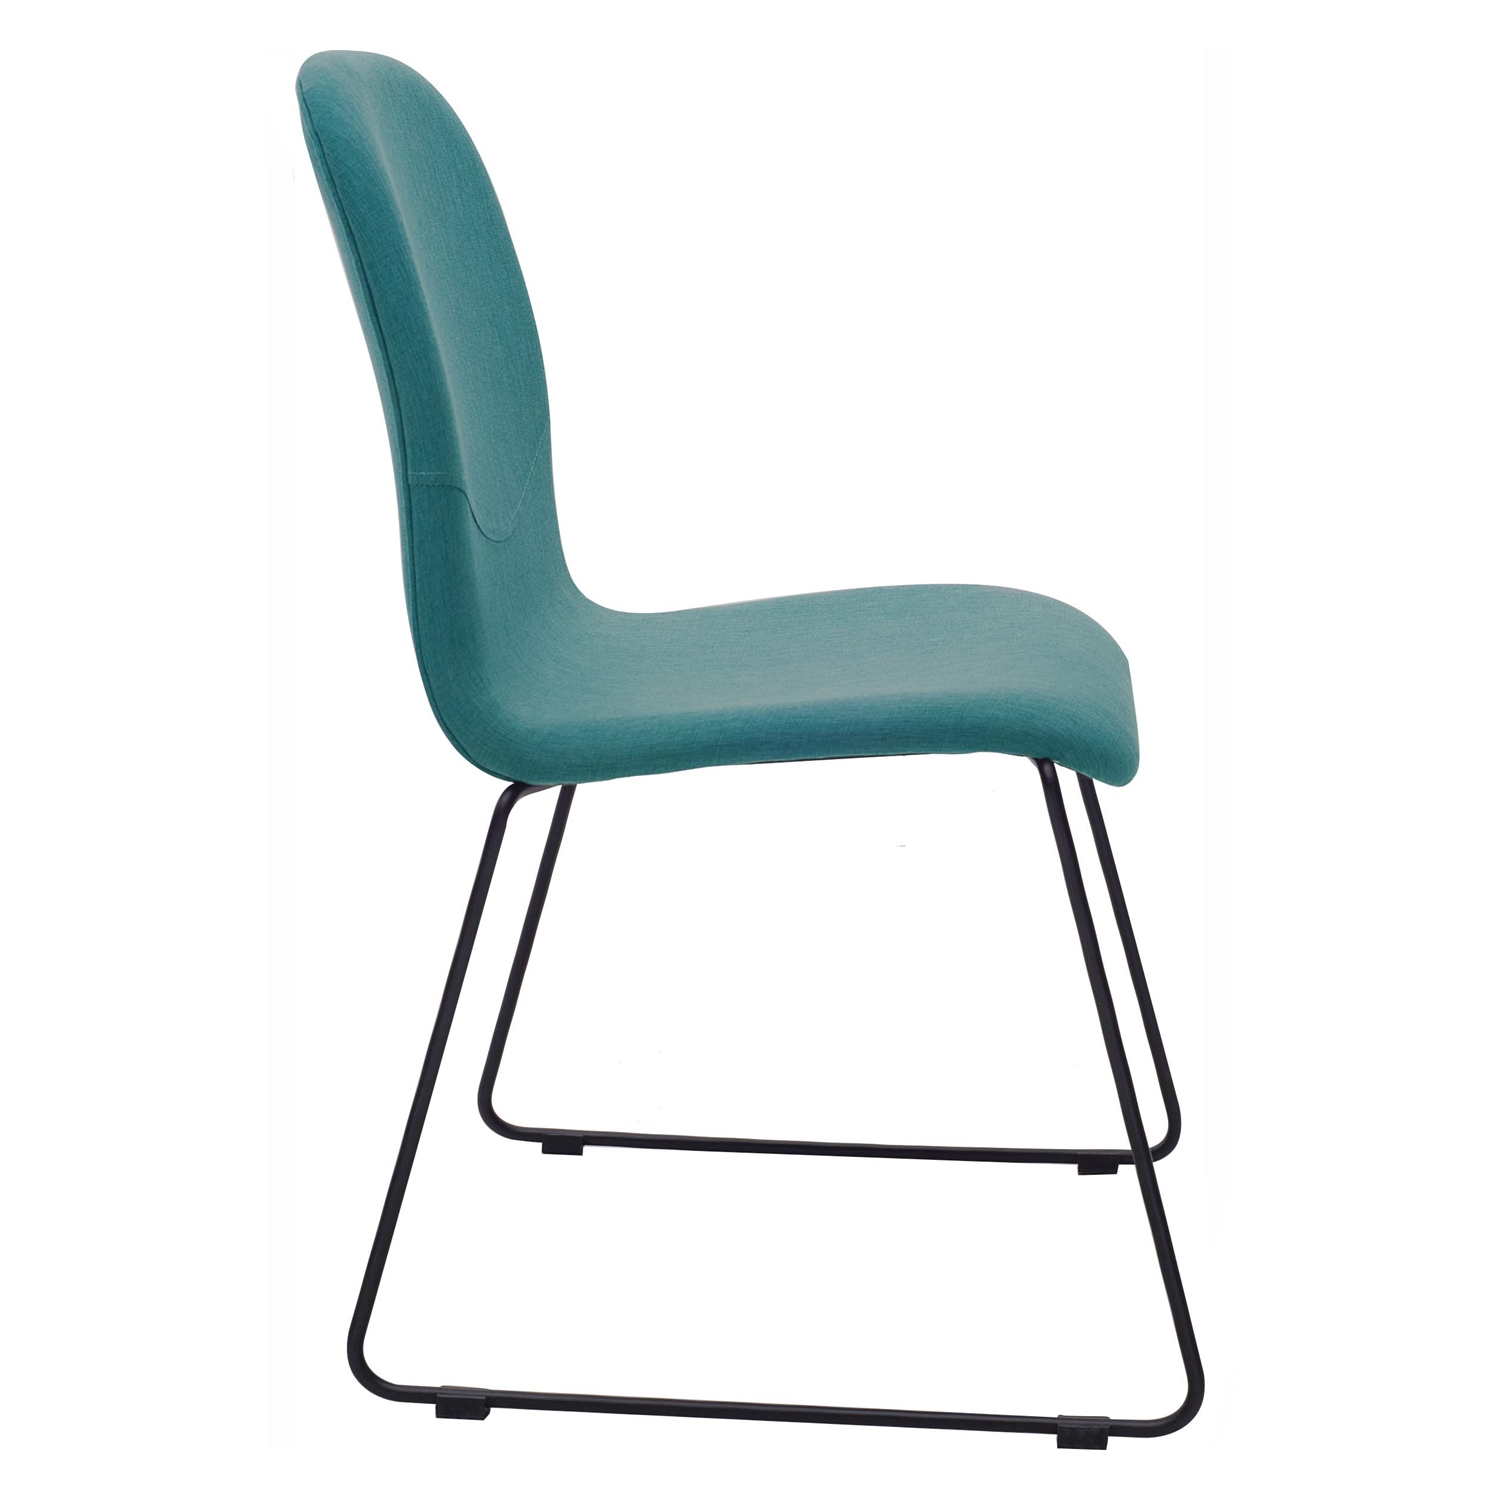 AIMIZON Bve dining chair in Matt Black Epoxy leg, Emarald colour Delaine fabric frame